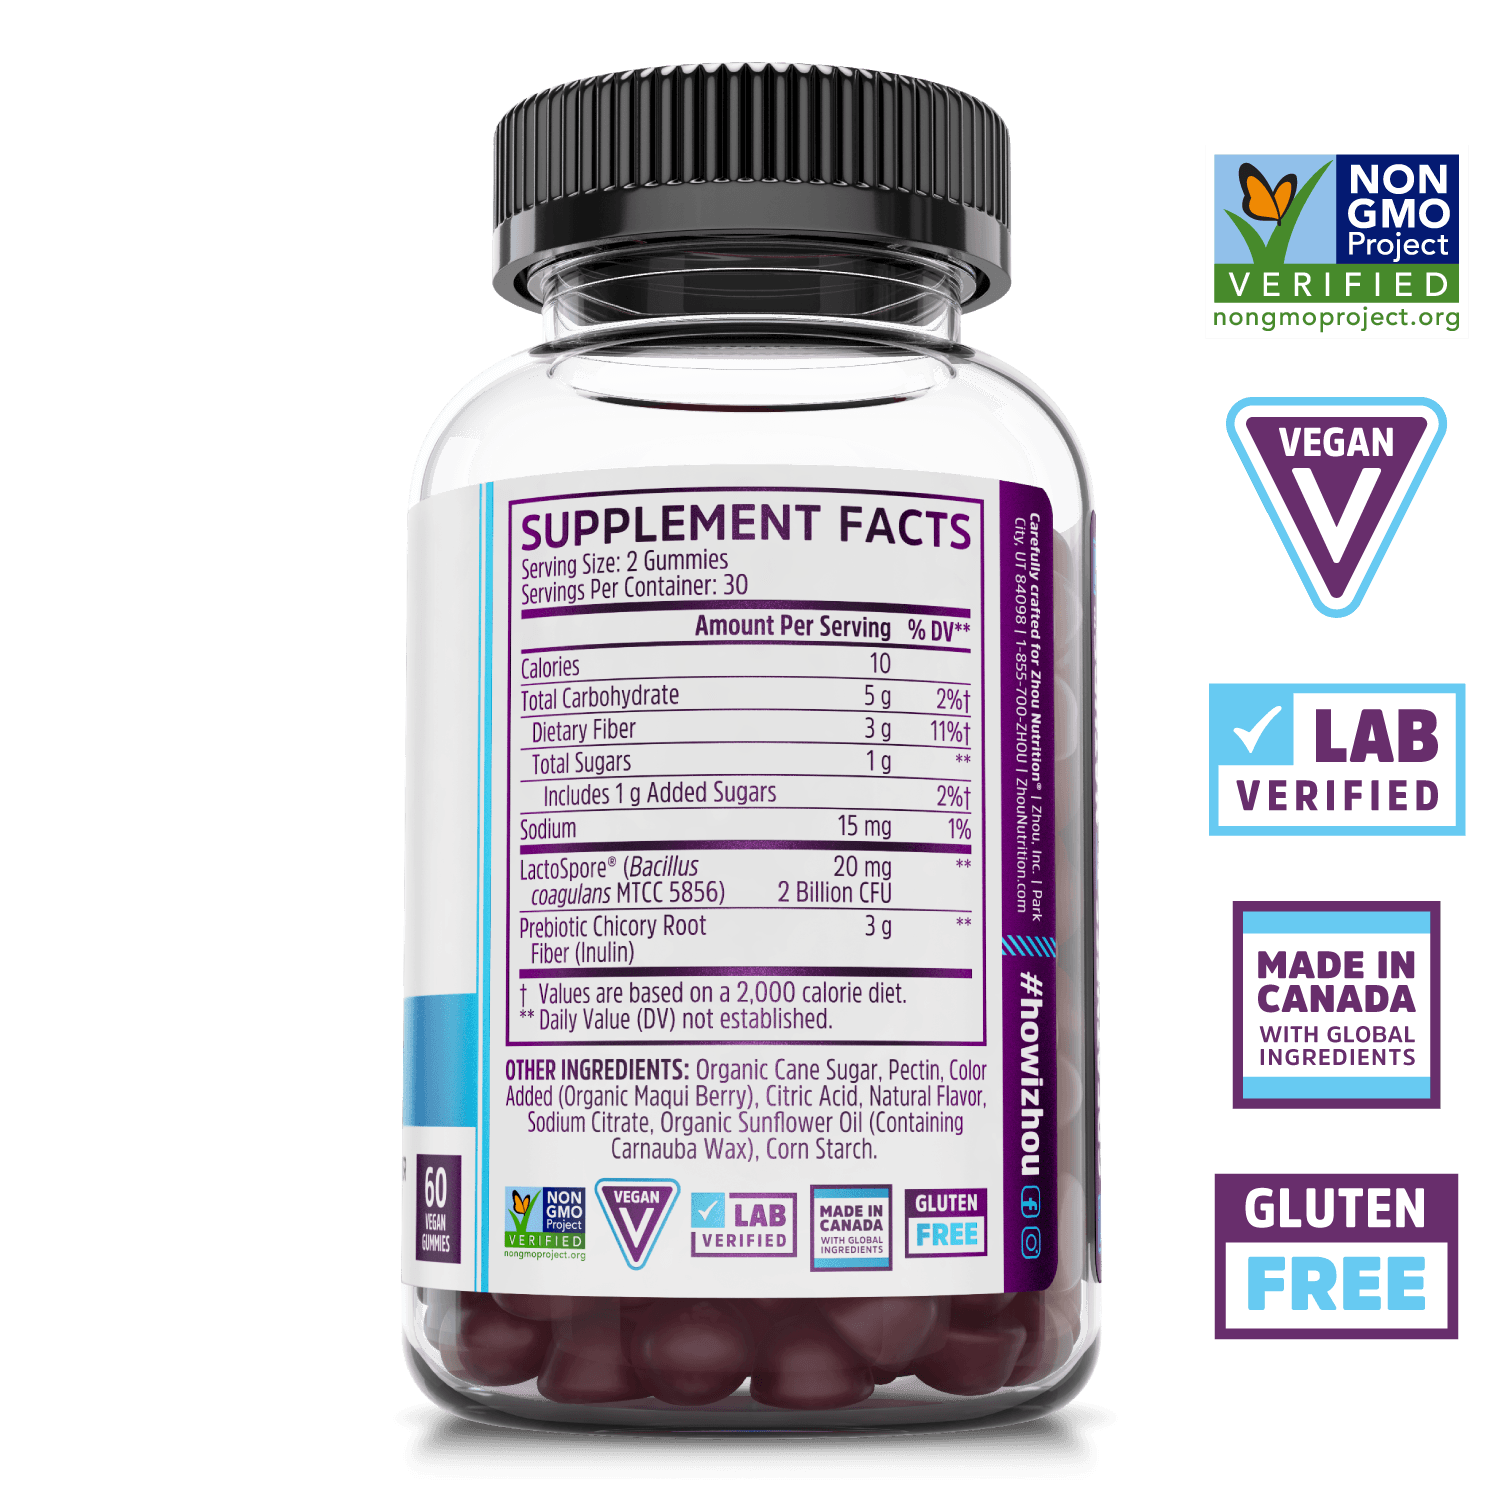 Gut Guru gut health supplement gummy from Zhou Nutrition. Non-GMO project verified, vegan, lab verified, made in Canada with global ingredients, gluten free.